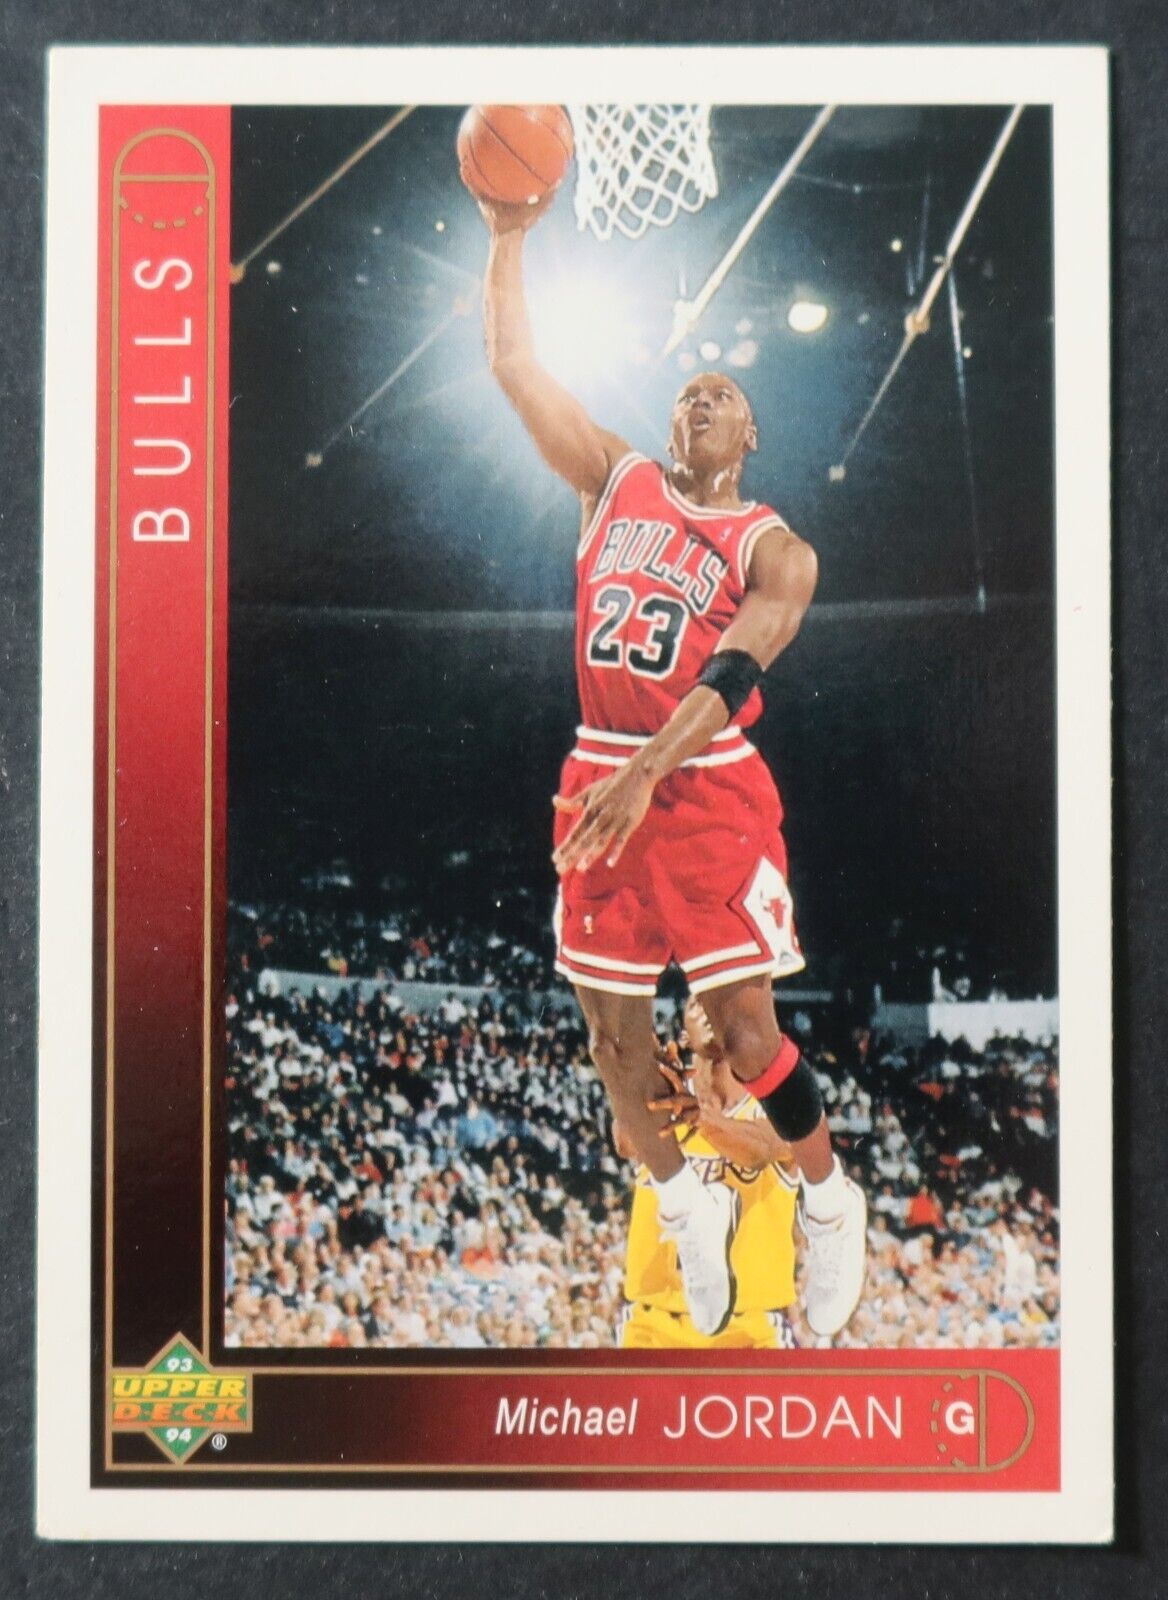 CHICAGO BULLS / Michael Jordan / Upper Deck 93 94 #23 / Basketball Card